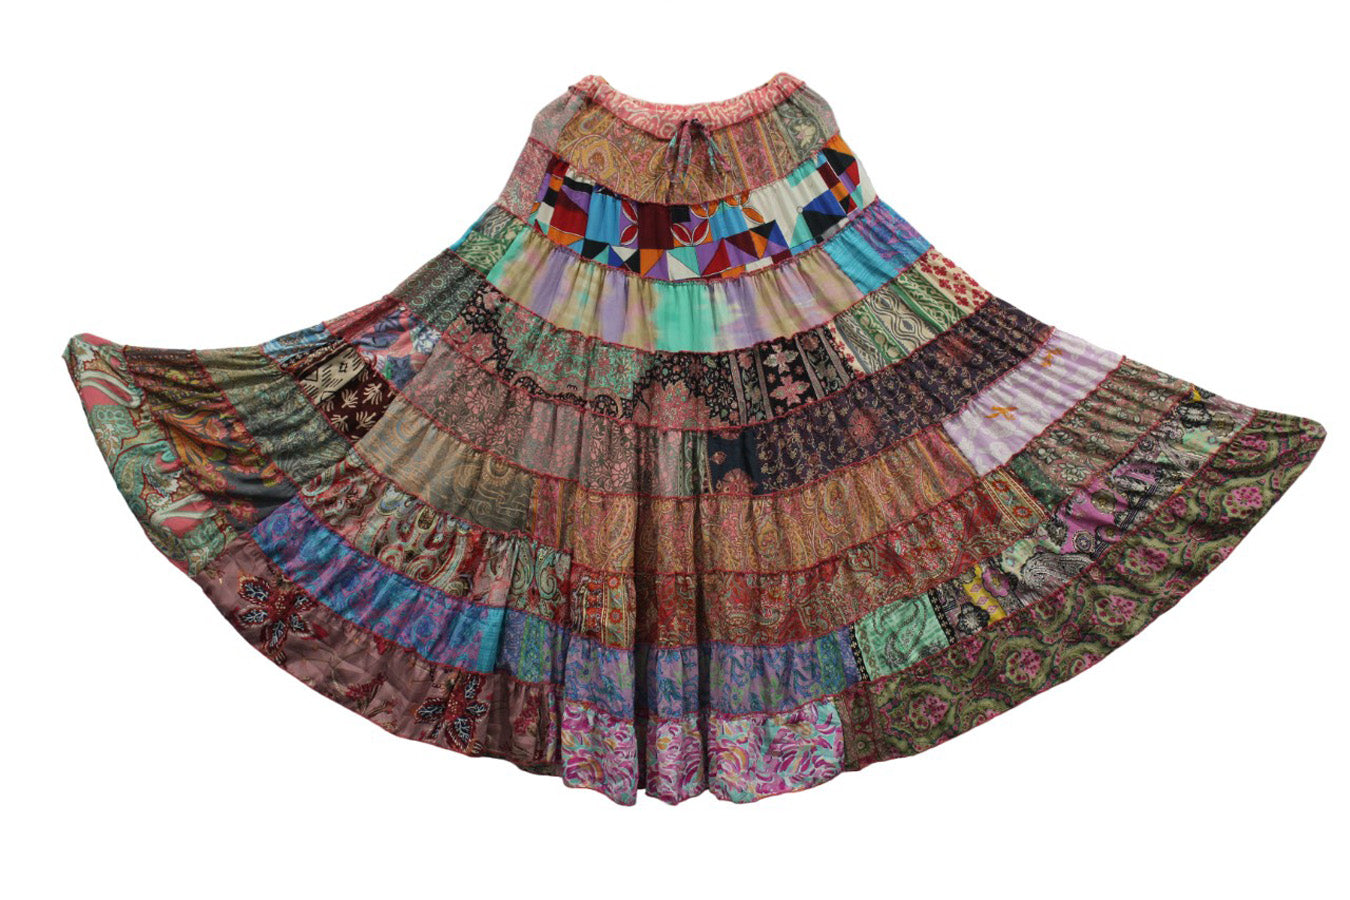 Silk Saree Long Maxi Dress Boho Hippie Clothes Beach Summer Gypsy Skirts  Women